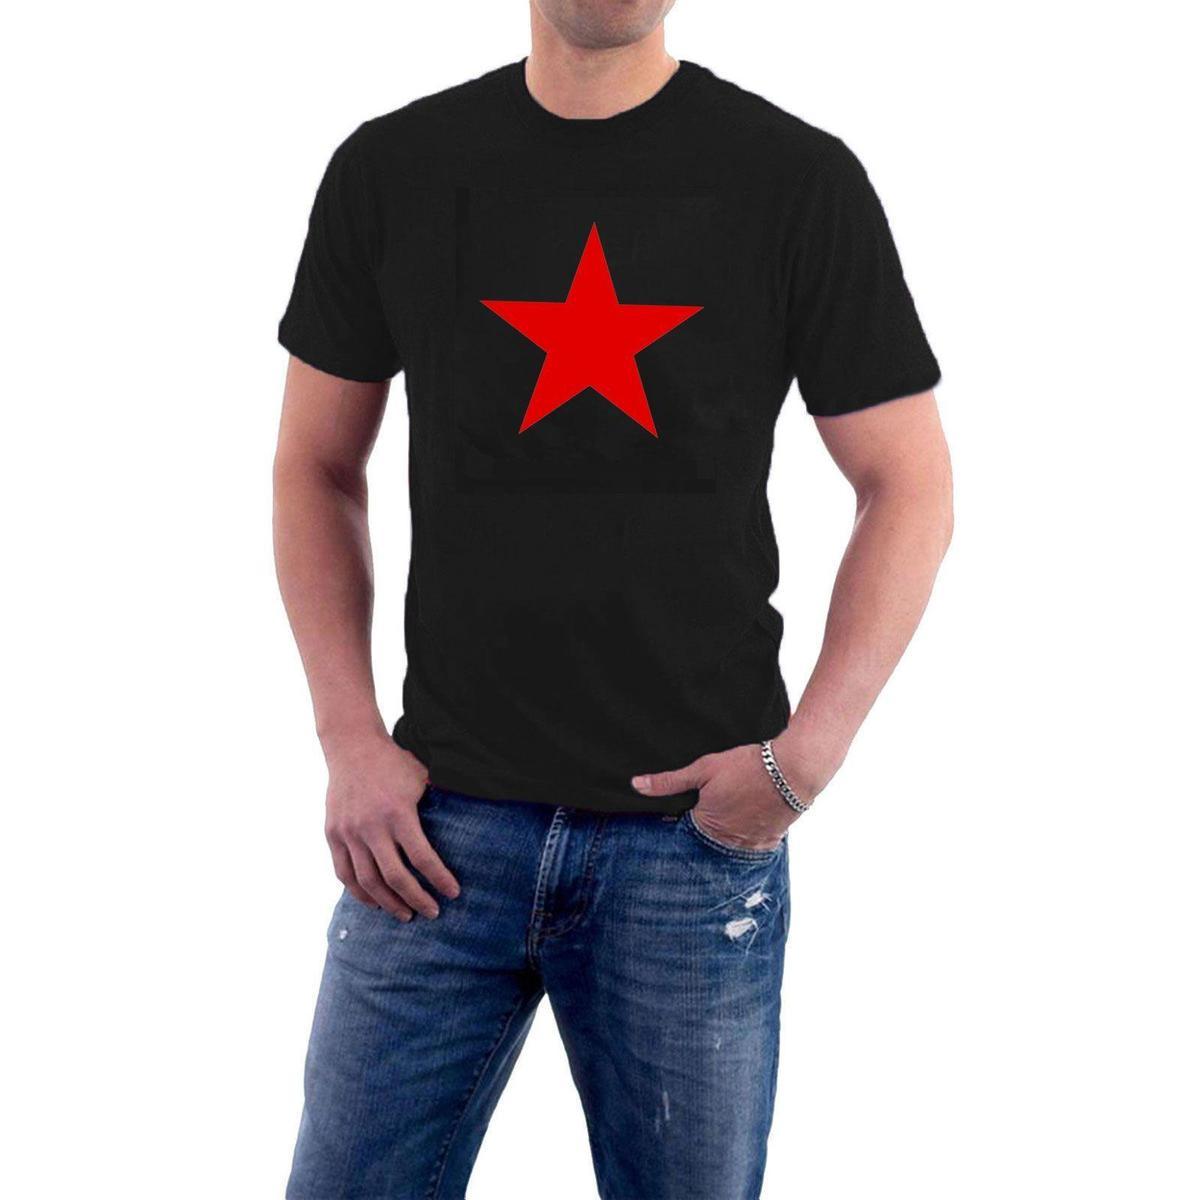 Star Shirt Company Logo - Red Star T Shirt Politics Protest Manics Rage Tee Generic Logo ...